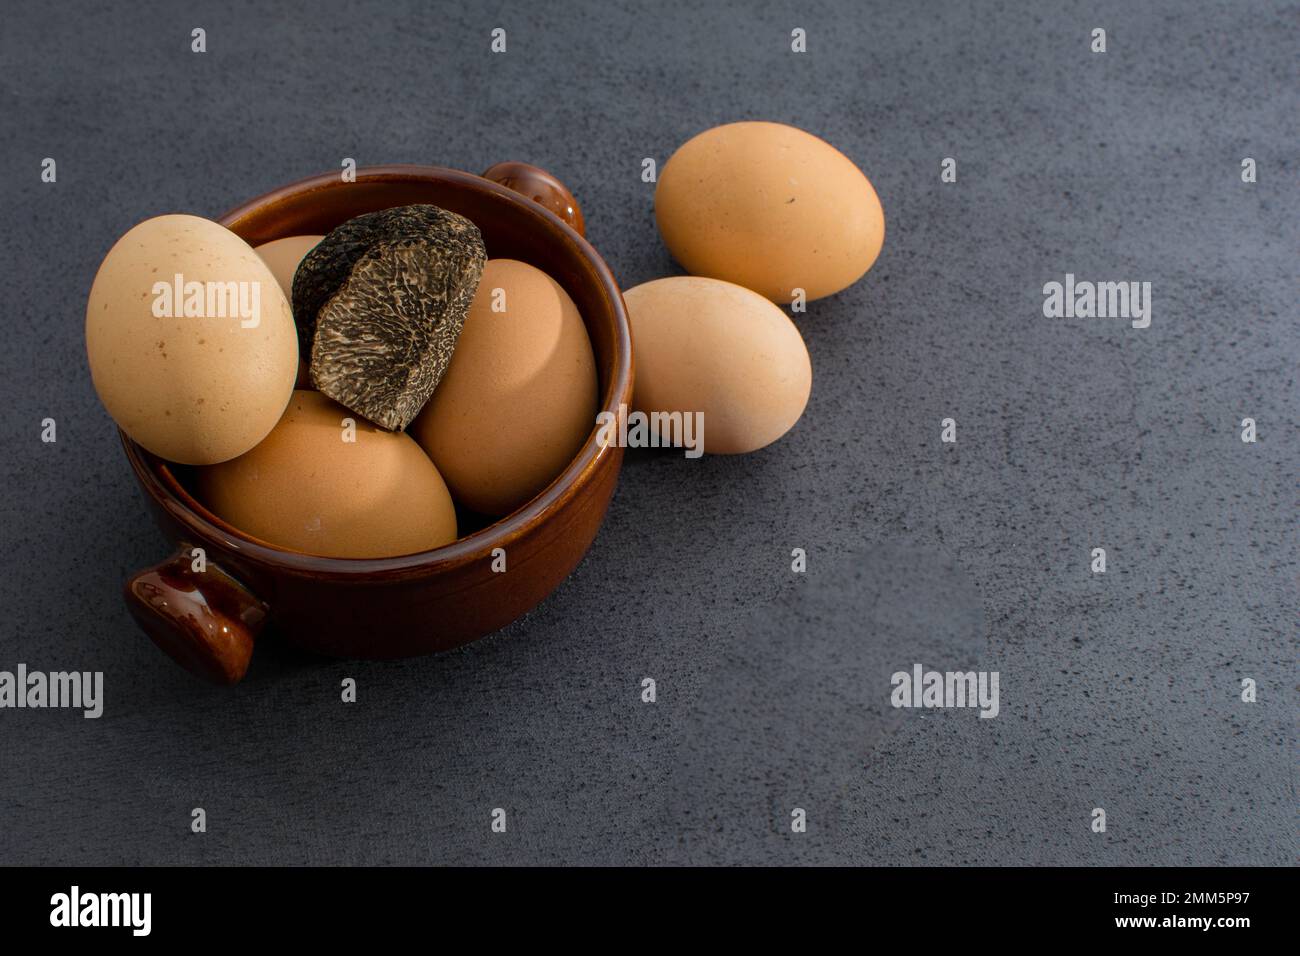 Truffled eggs with a tuber melanosporum winter truffle Stock Photo